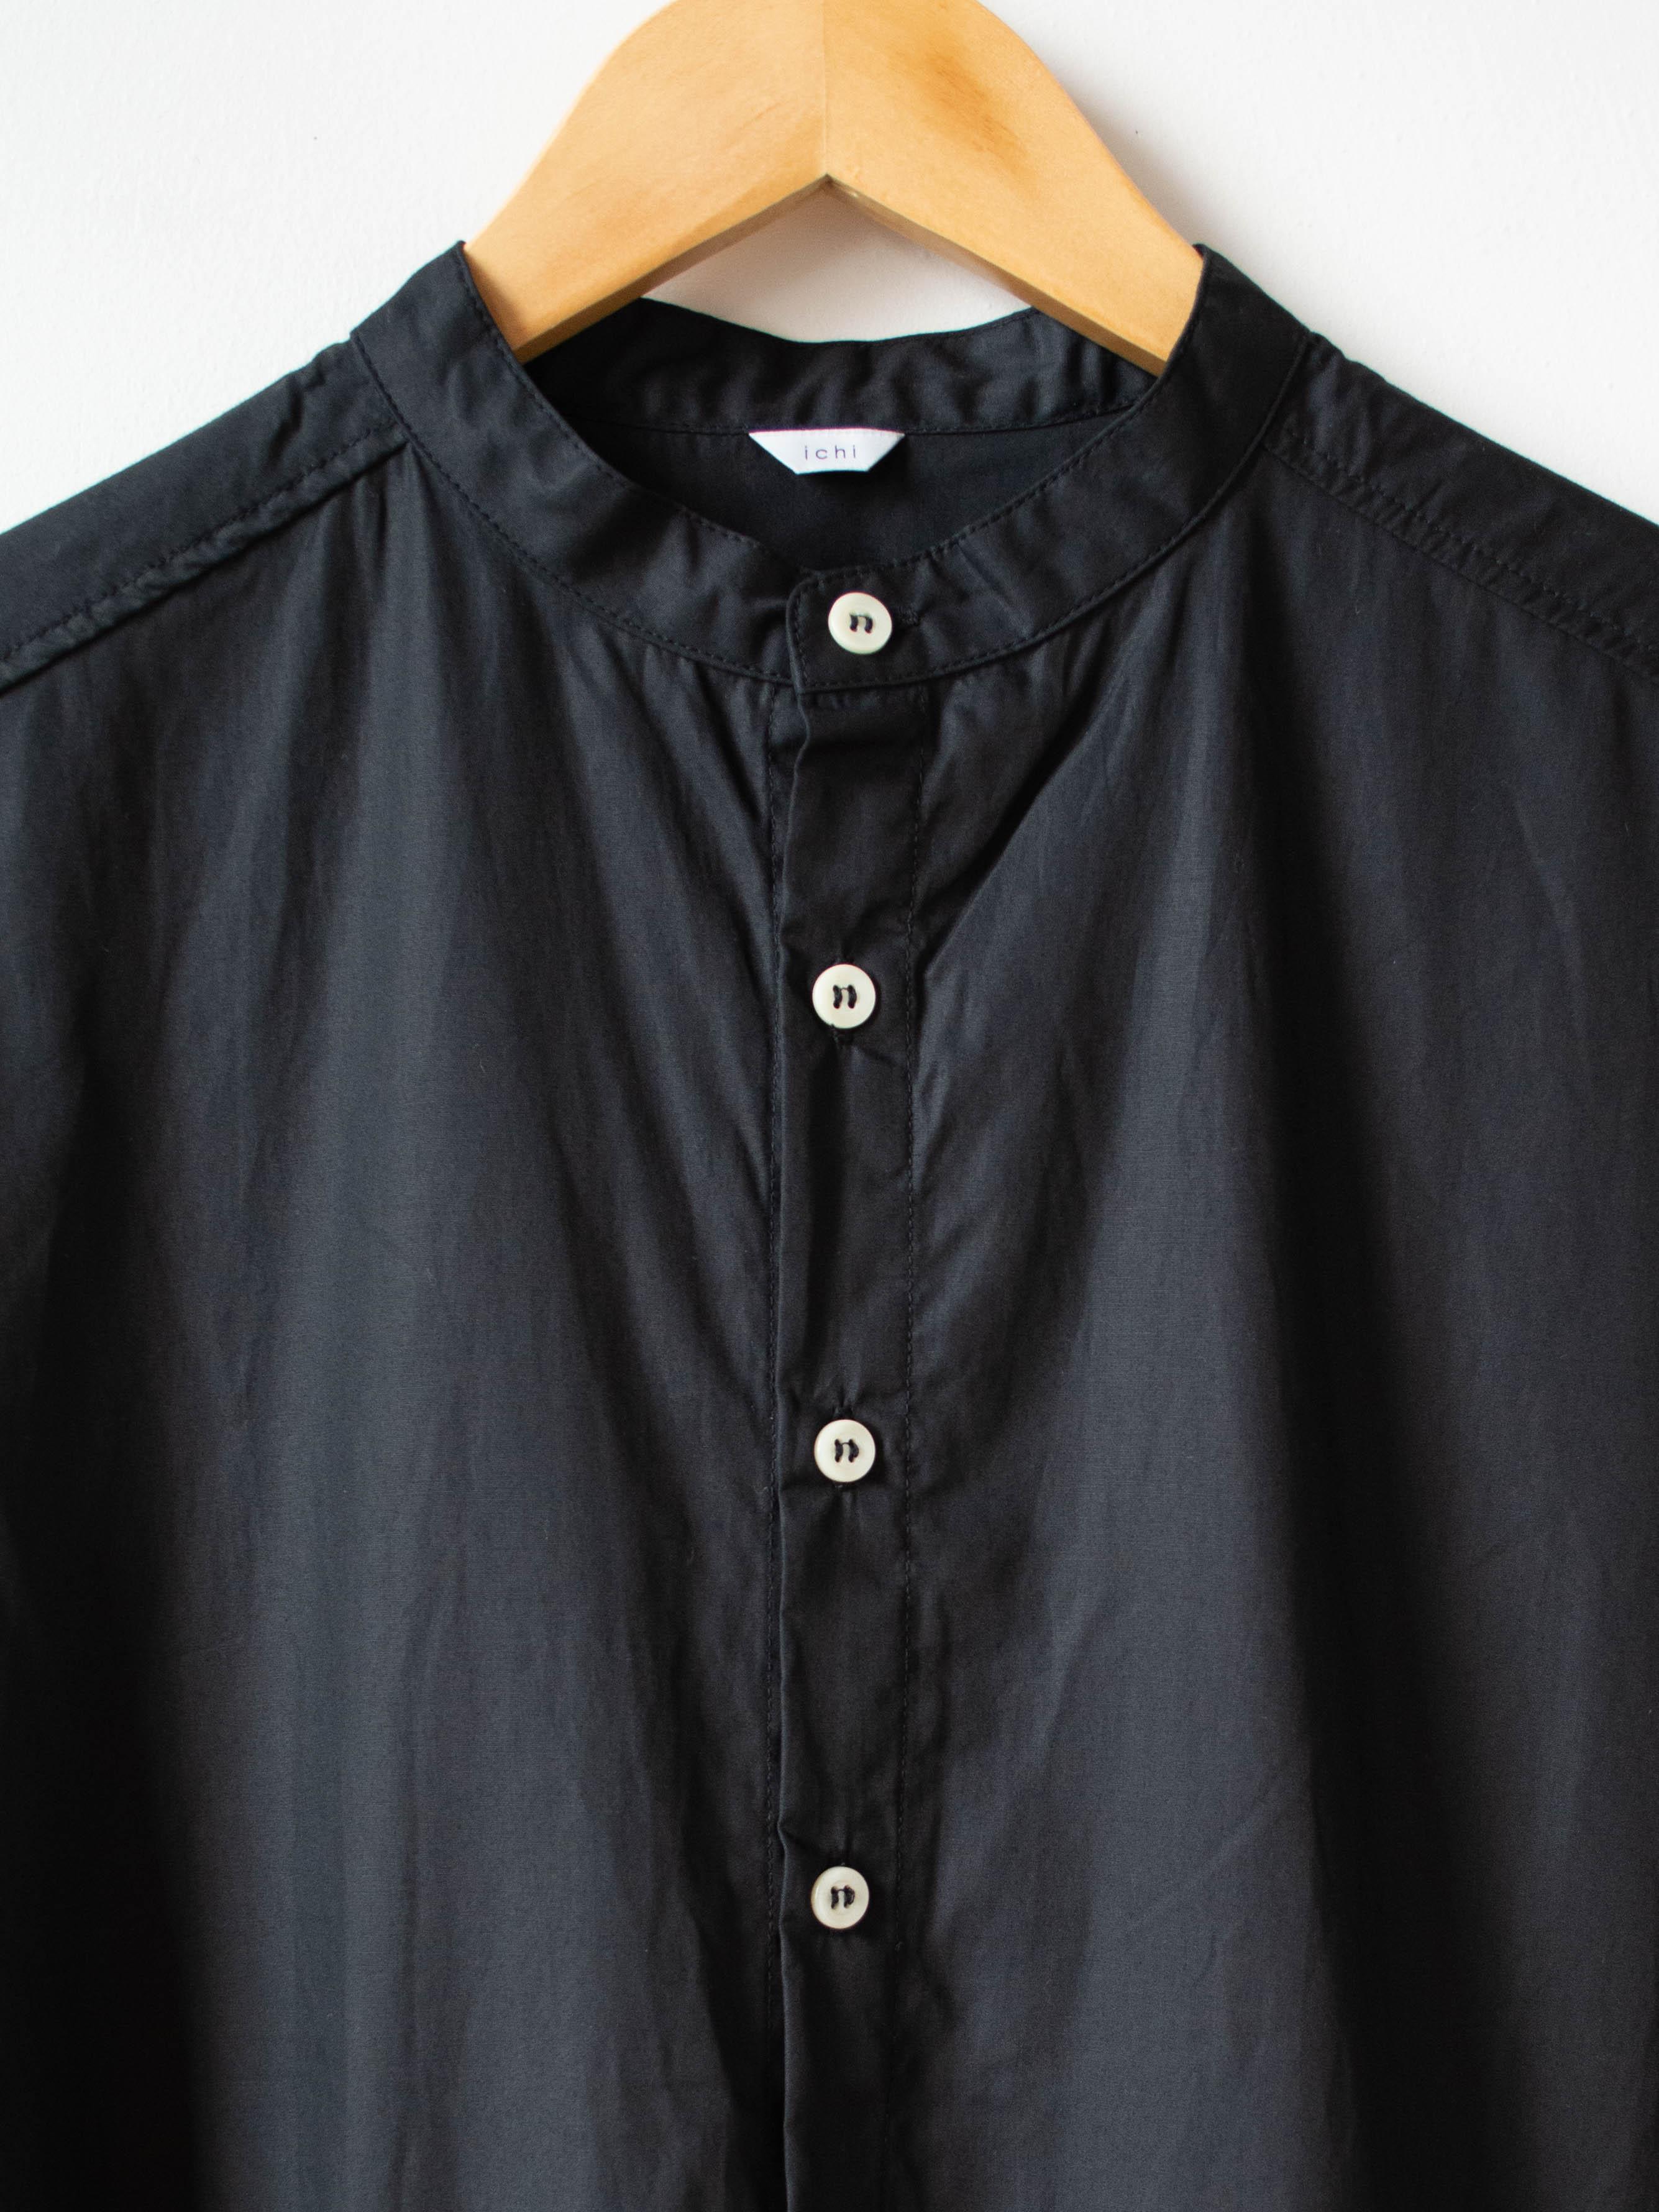 Namu Shop - Ichi Antiquites Crisp Band Collar Shirt Dress - Black